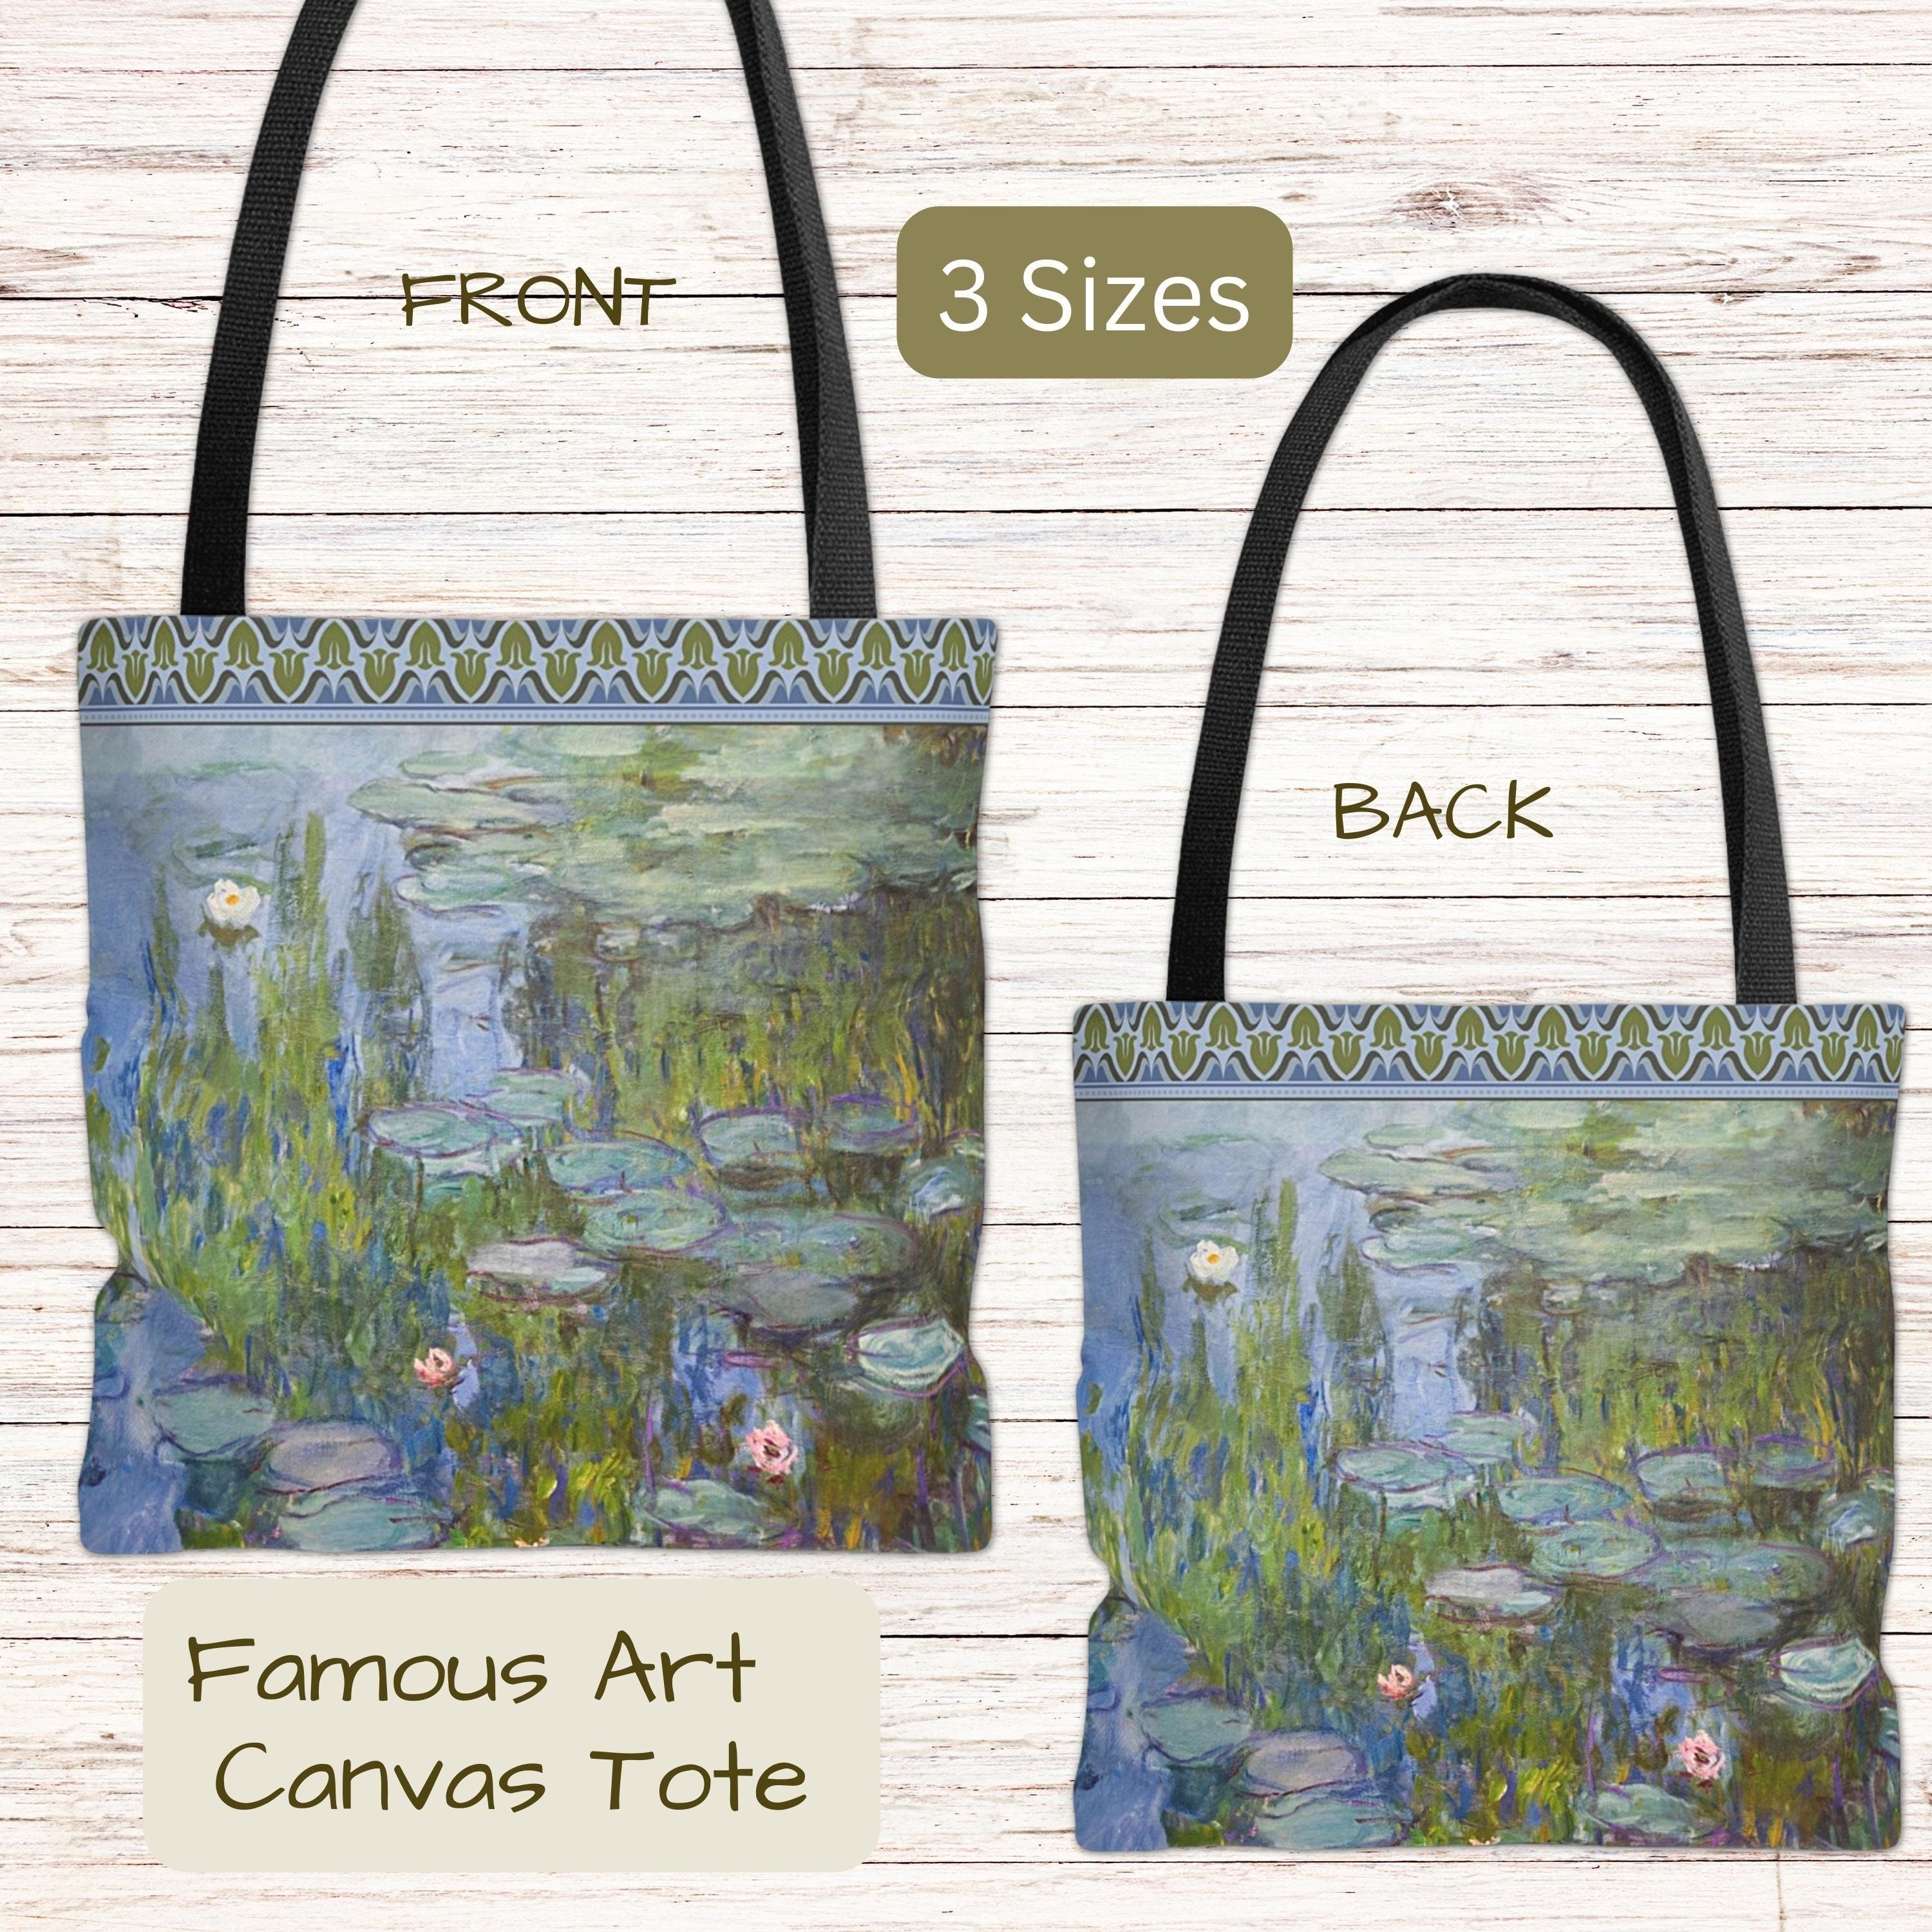 Custom Promenade Woman by Claude Monet Large Tote Bag with Rope Handles